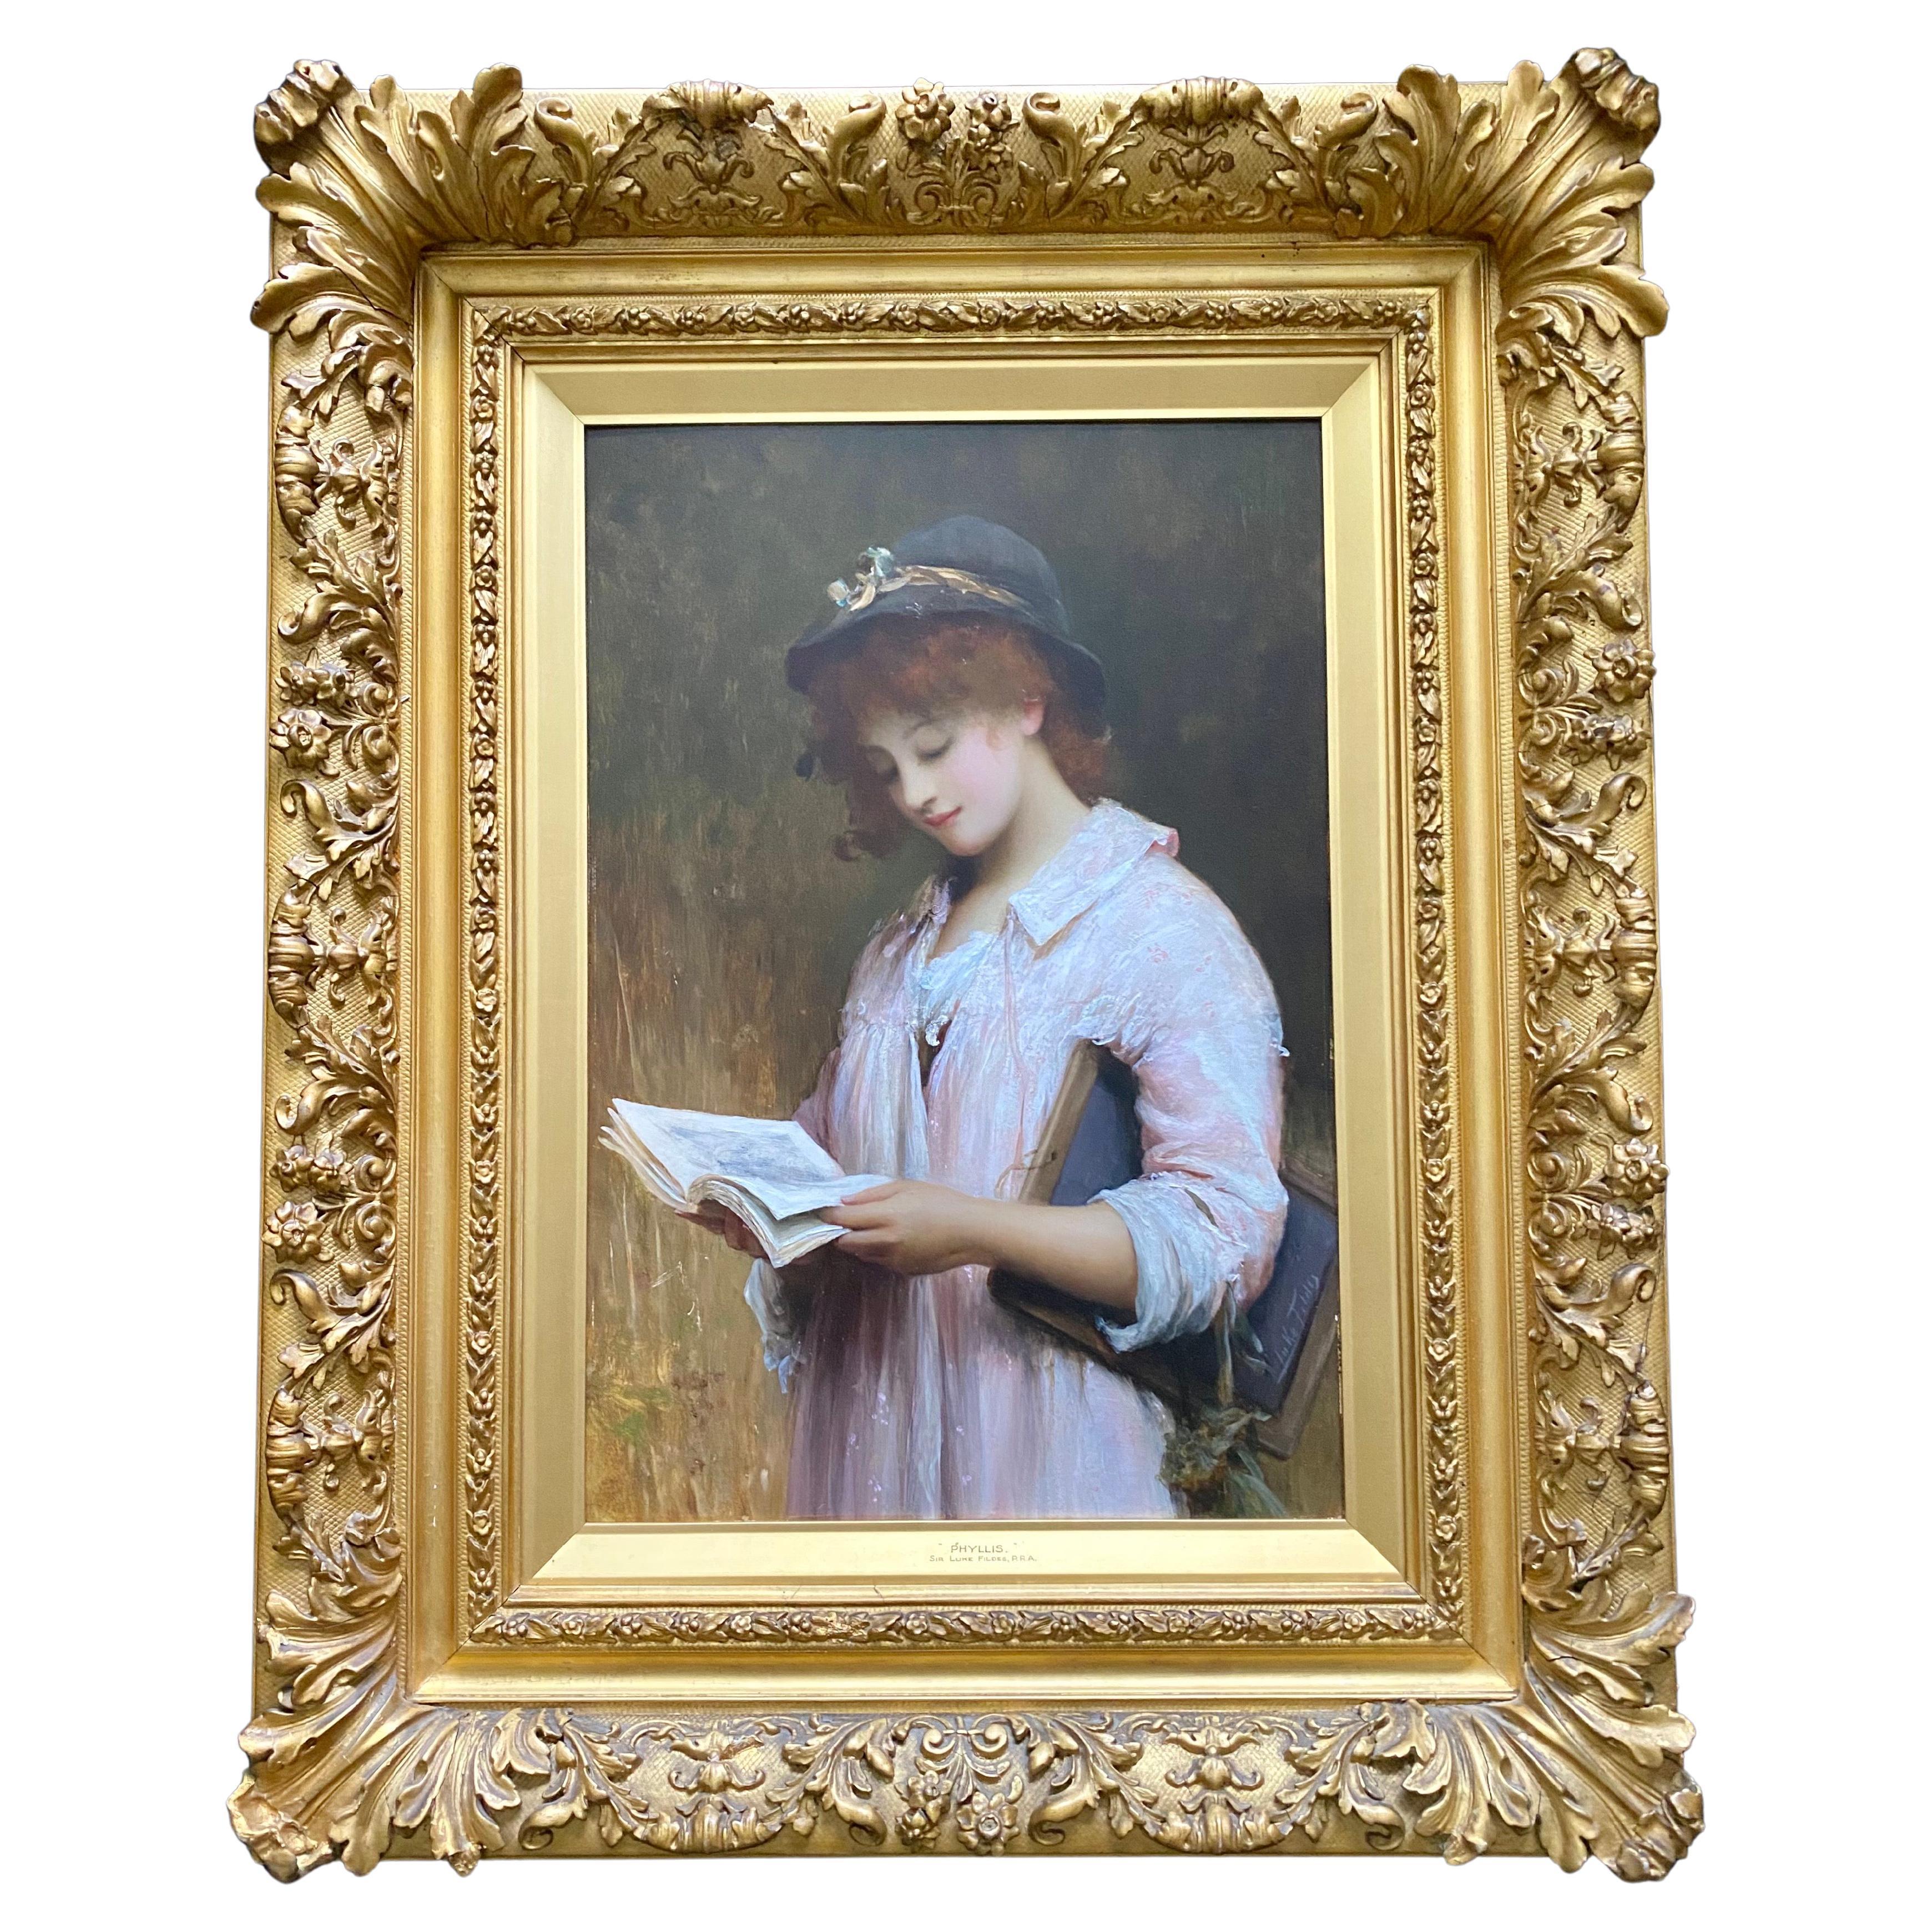 Sir Samuel Luke Fildes RA, A Superb Quality Portrait Titled "Phyllis"